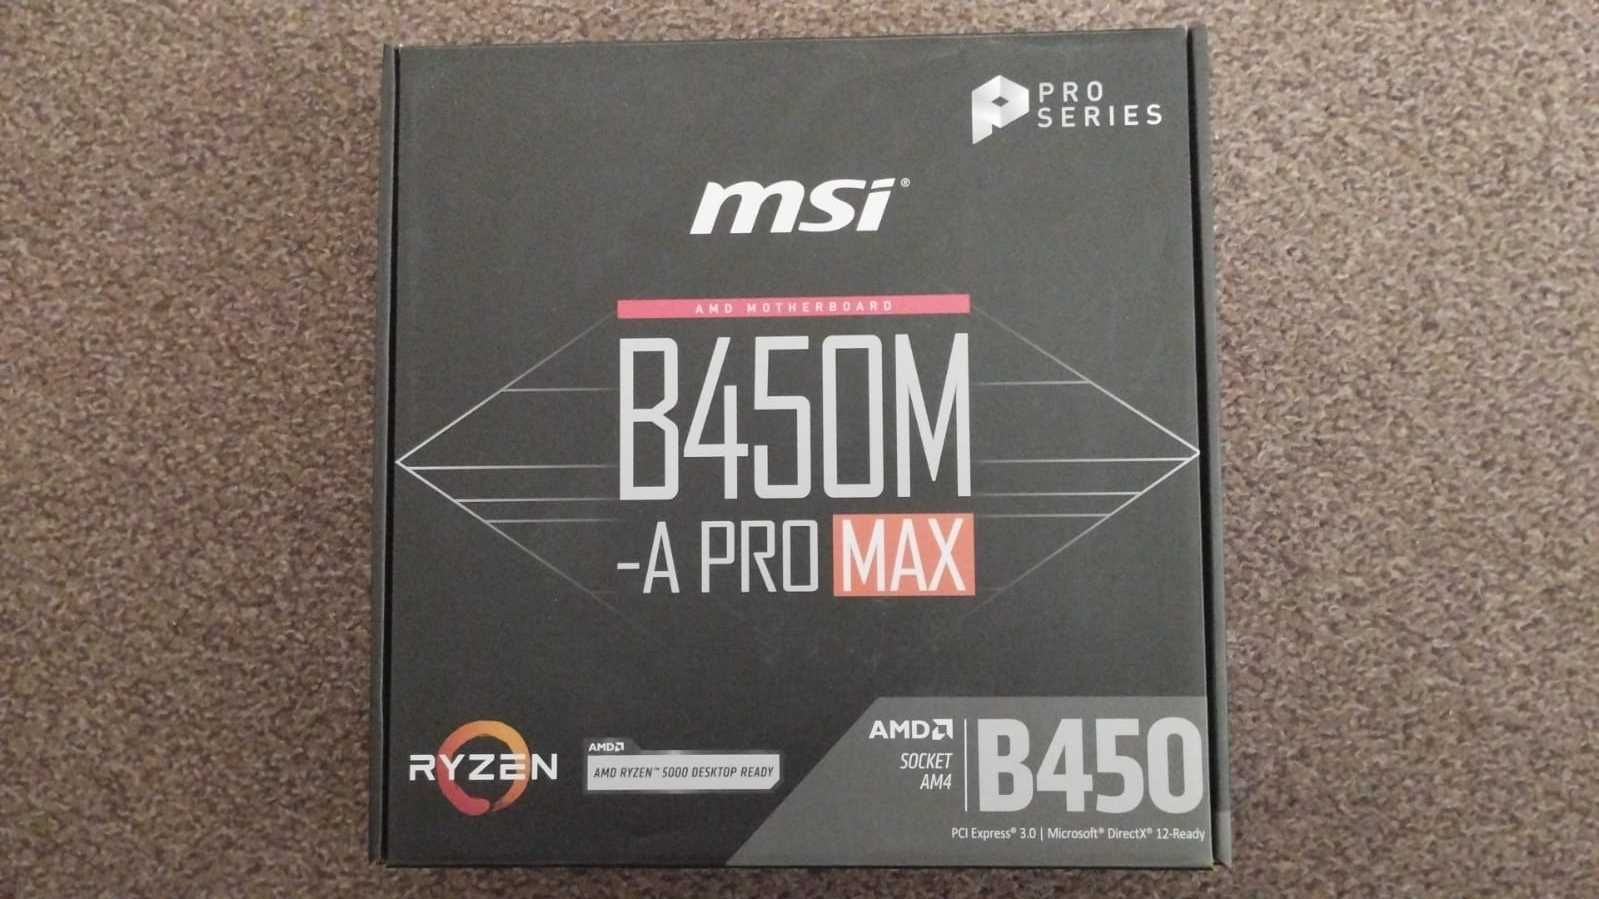 Kit AMD Cpu Ryzen 2600, 16Gb ram, MB MSI SIGILATA CU GARANTIE